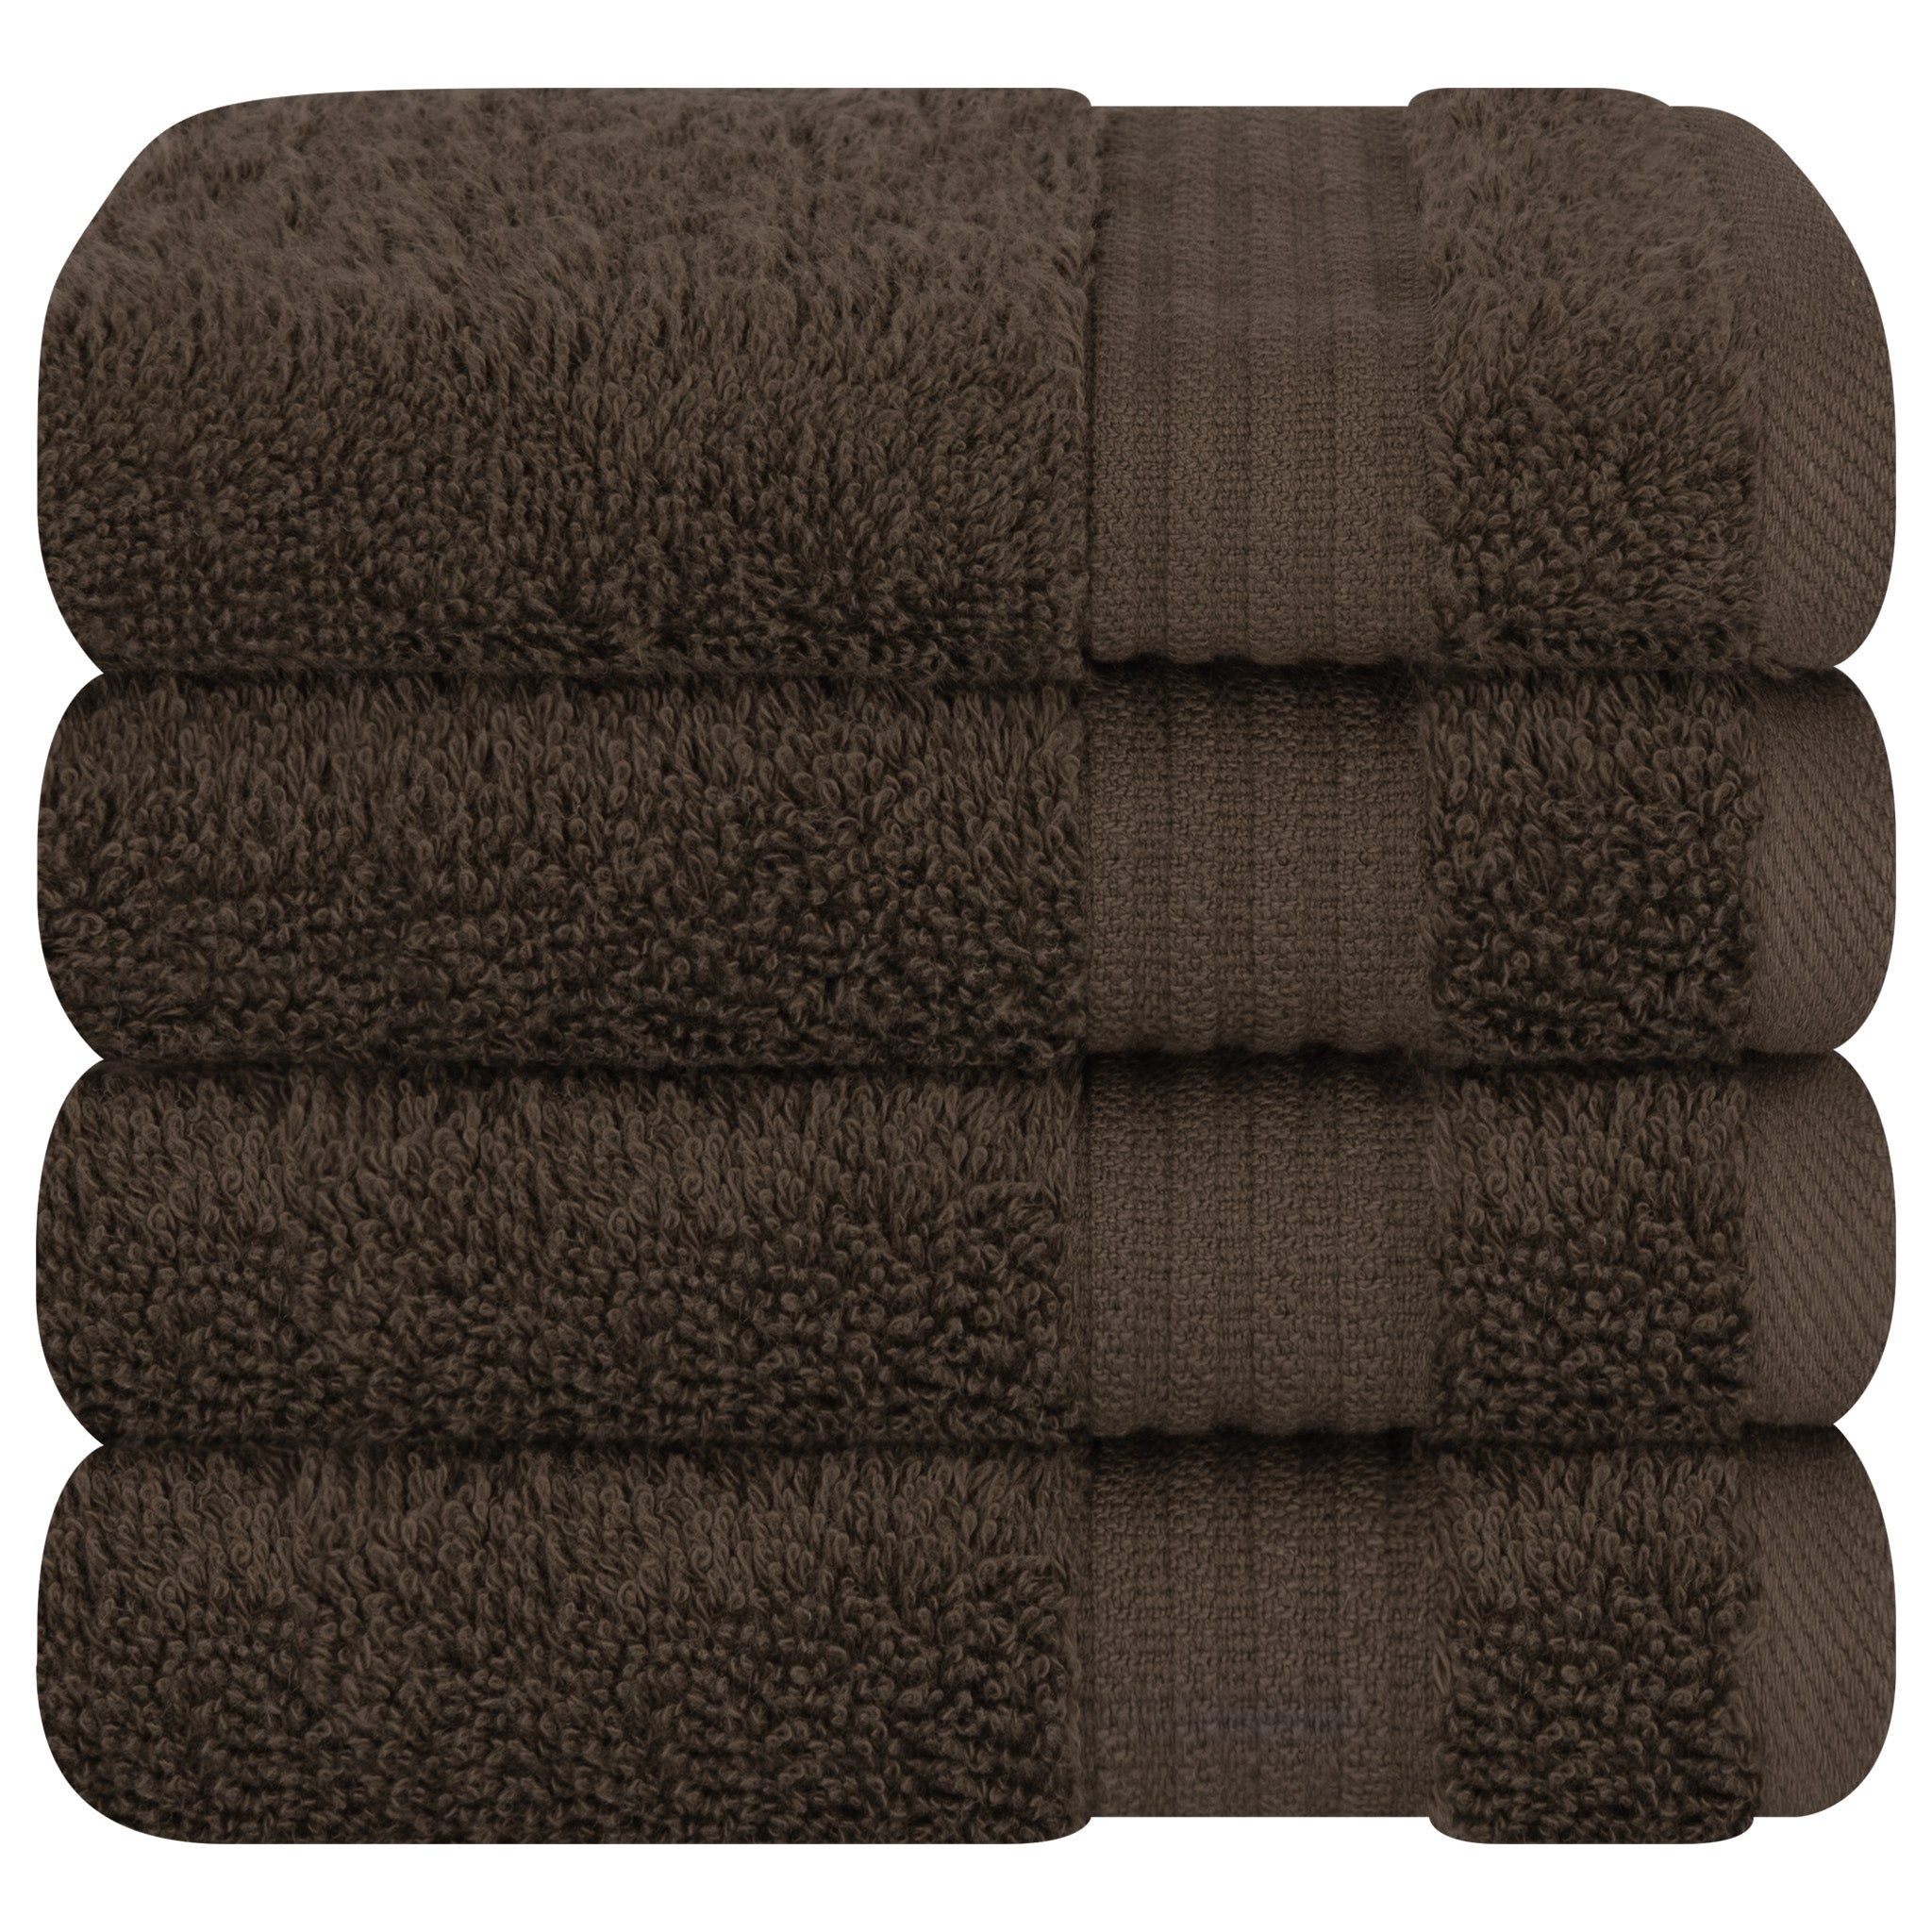 American Soft Linen Bekos 100% Cotton Turkish Towels, 4 Piece Washcloth Towel Set -chocolate-brown-05